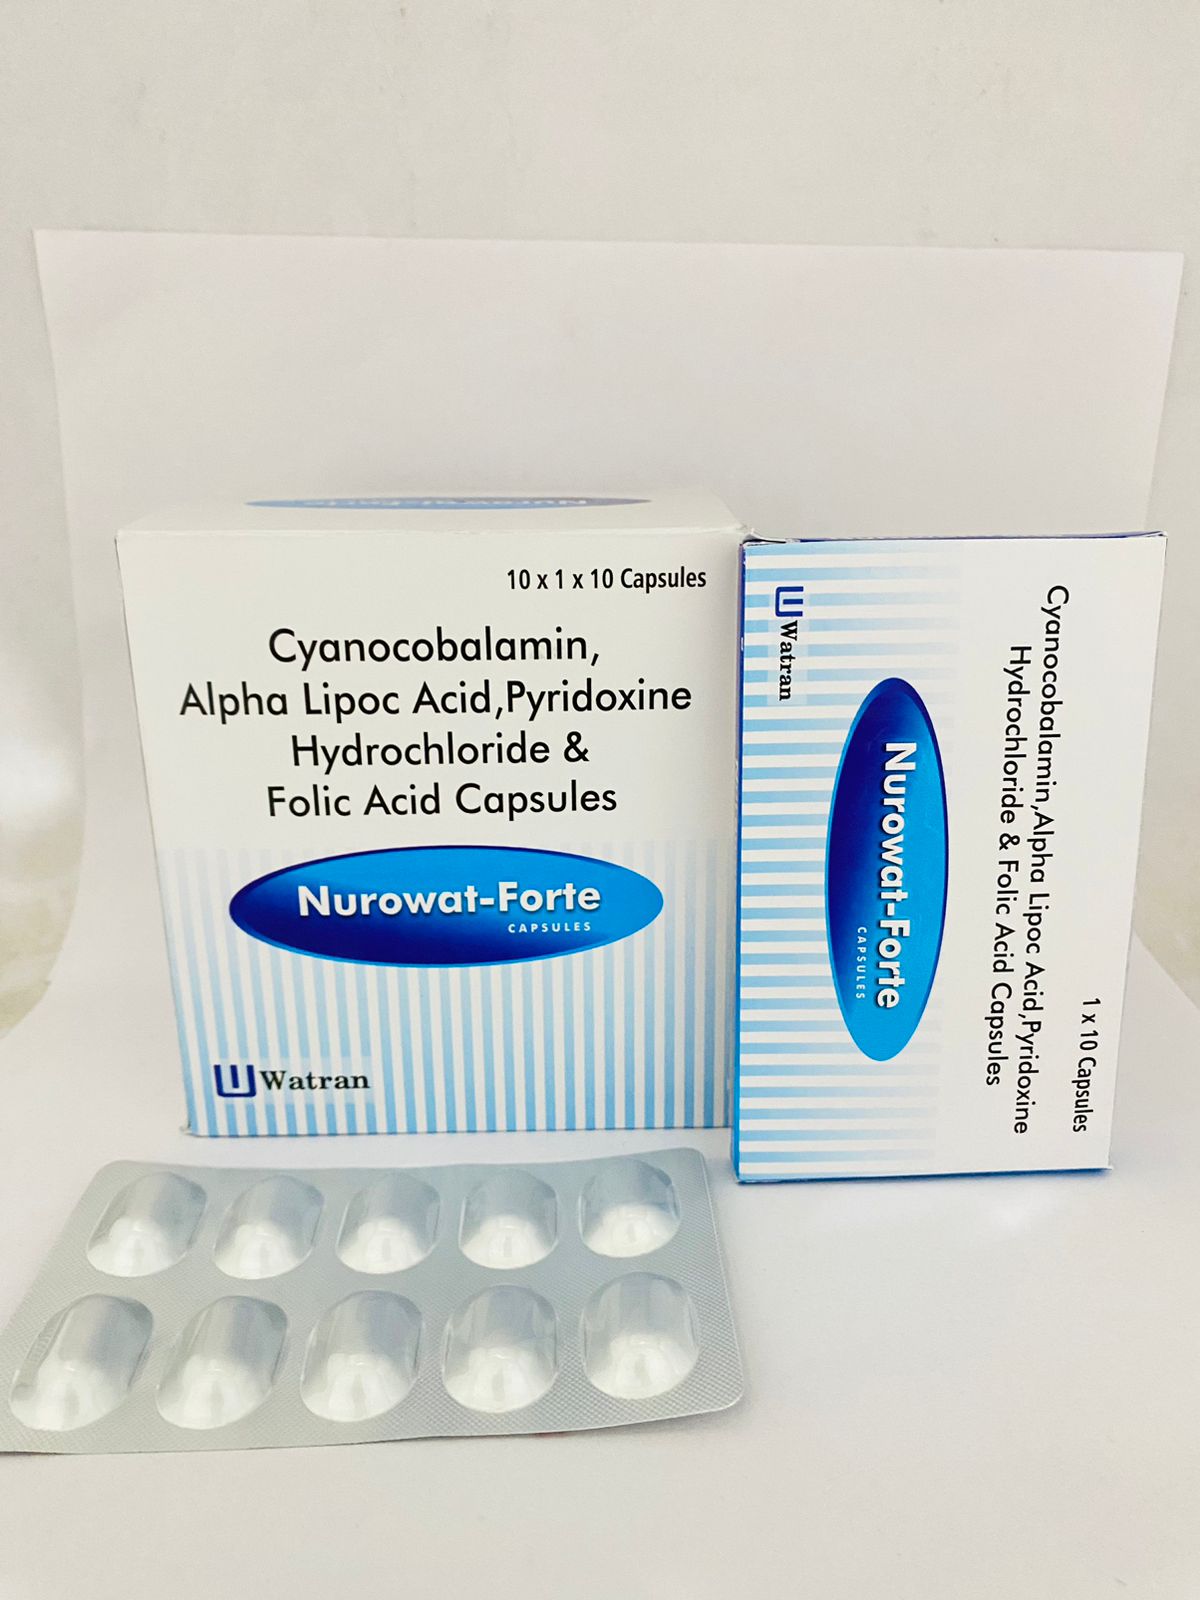 Benfotiamin 100 mg + Chycobalamin 1mcg + Prydoxine Hcl 3 mg + ALA 100 mg + Folic Acid 1.5 mg